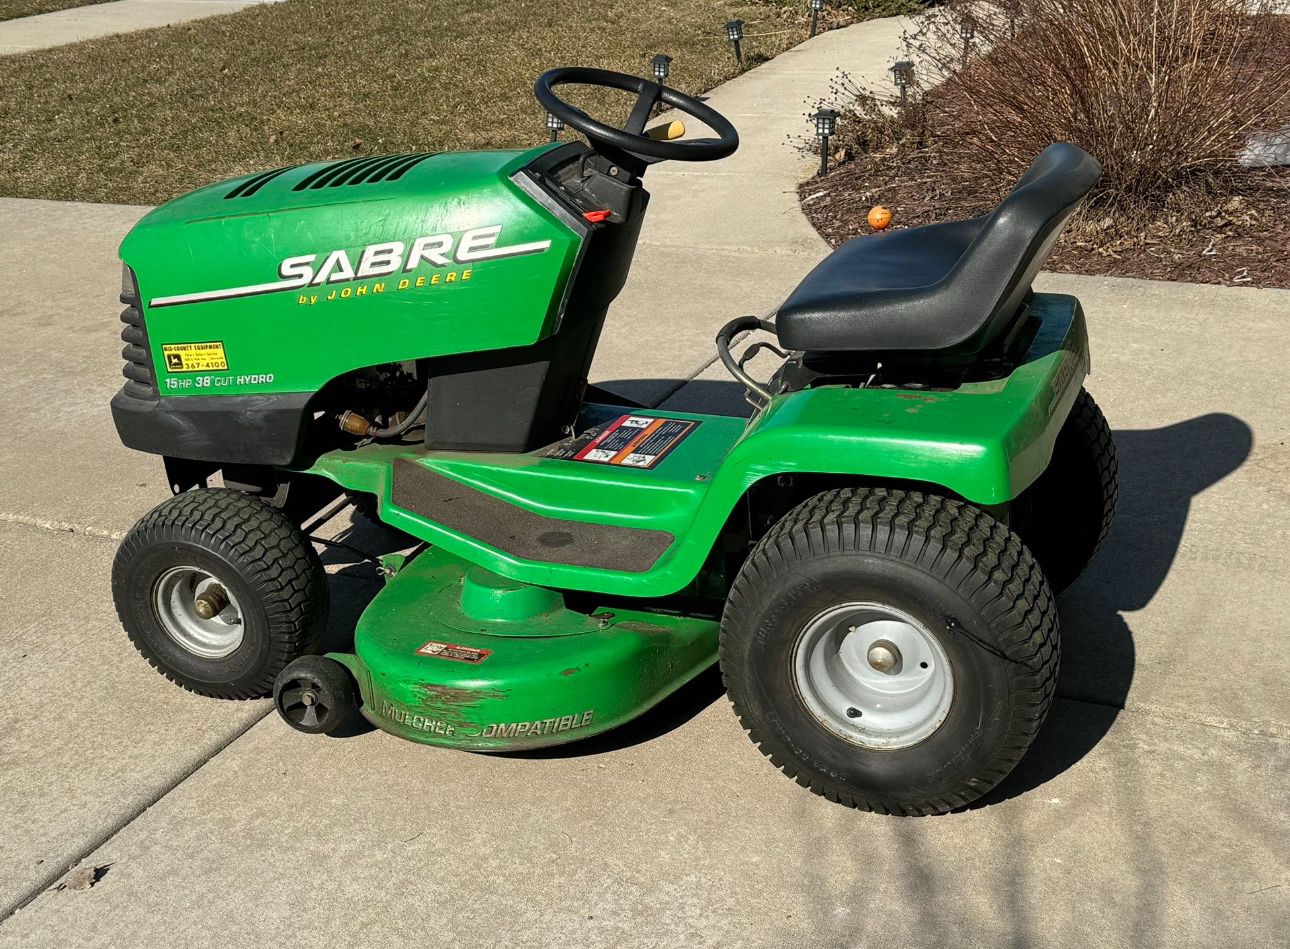 John Deere Tractor Lawn Mower